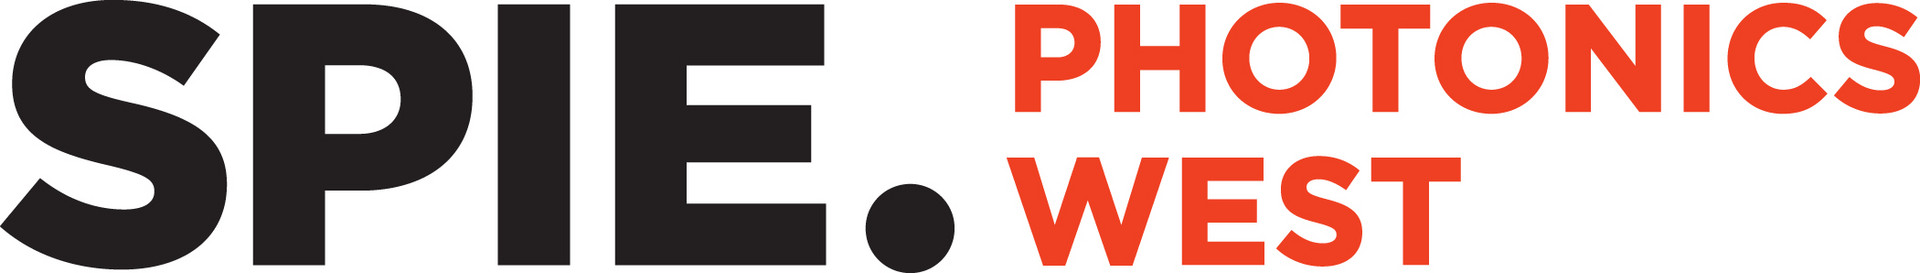 Logo of the SPIE Photonics West exhibition